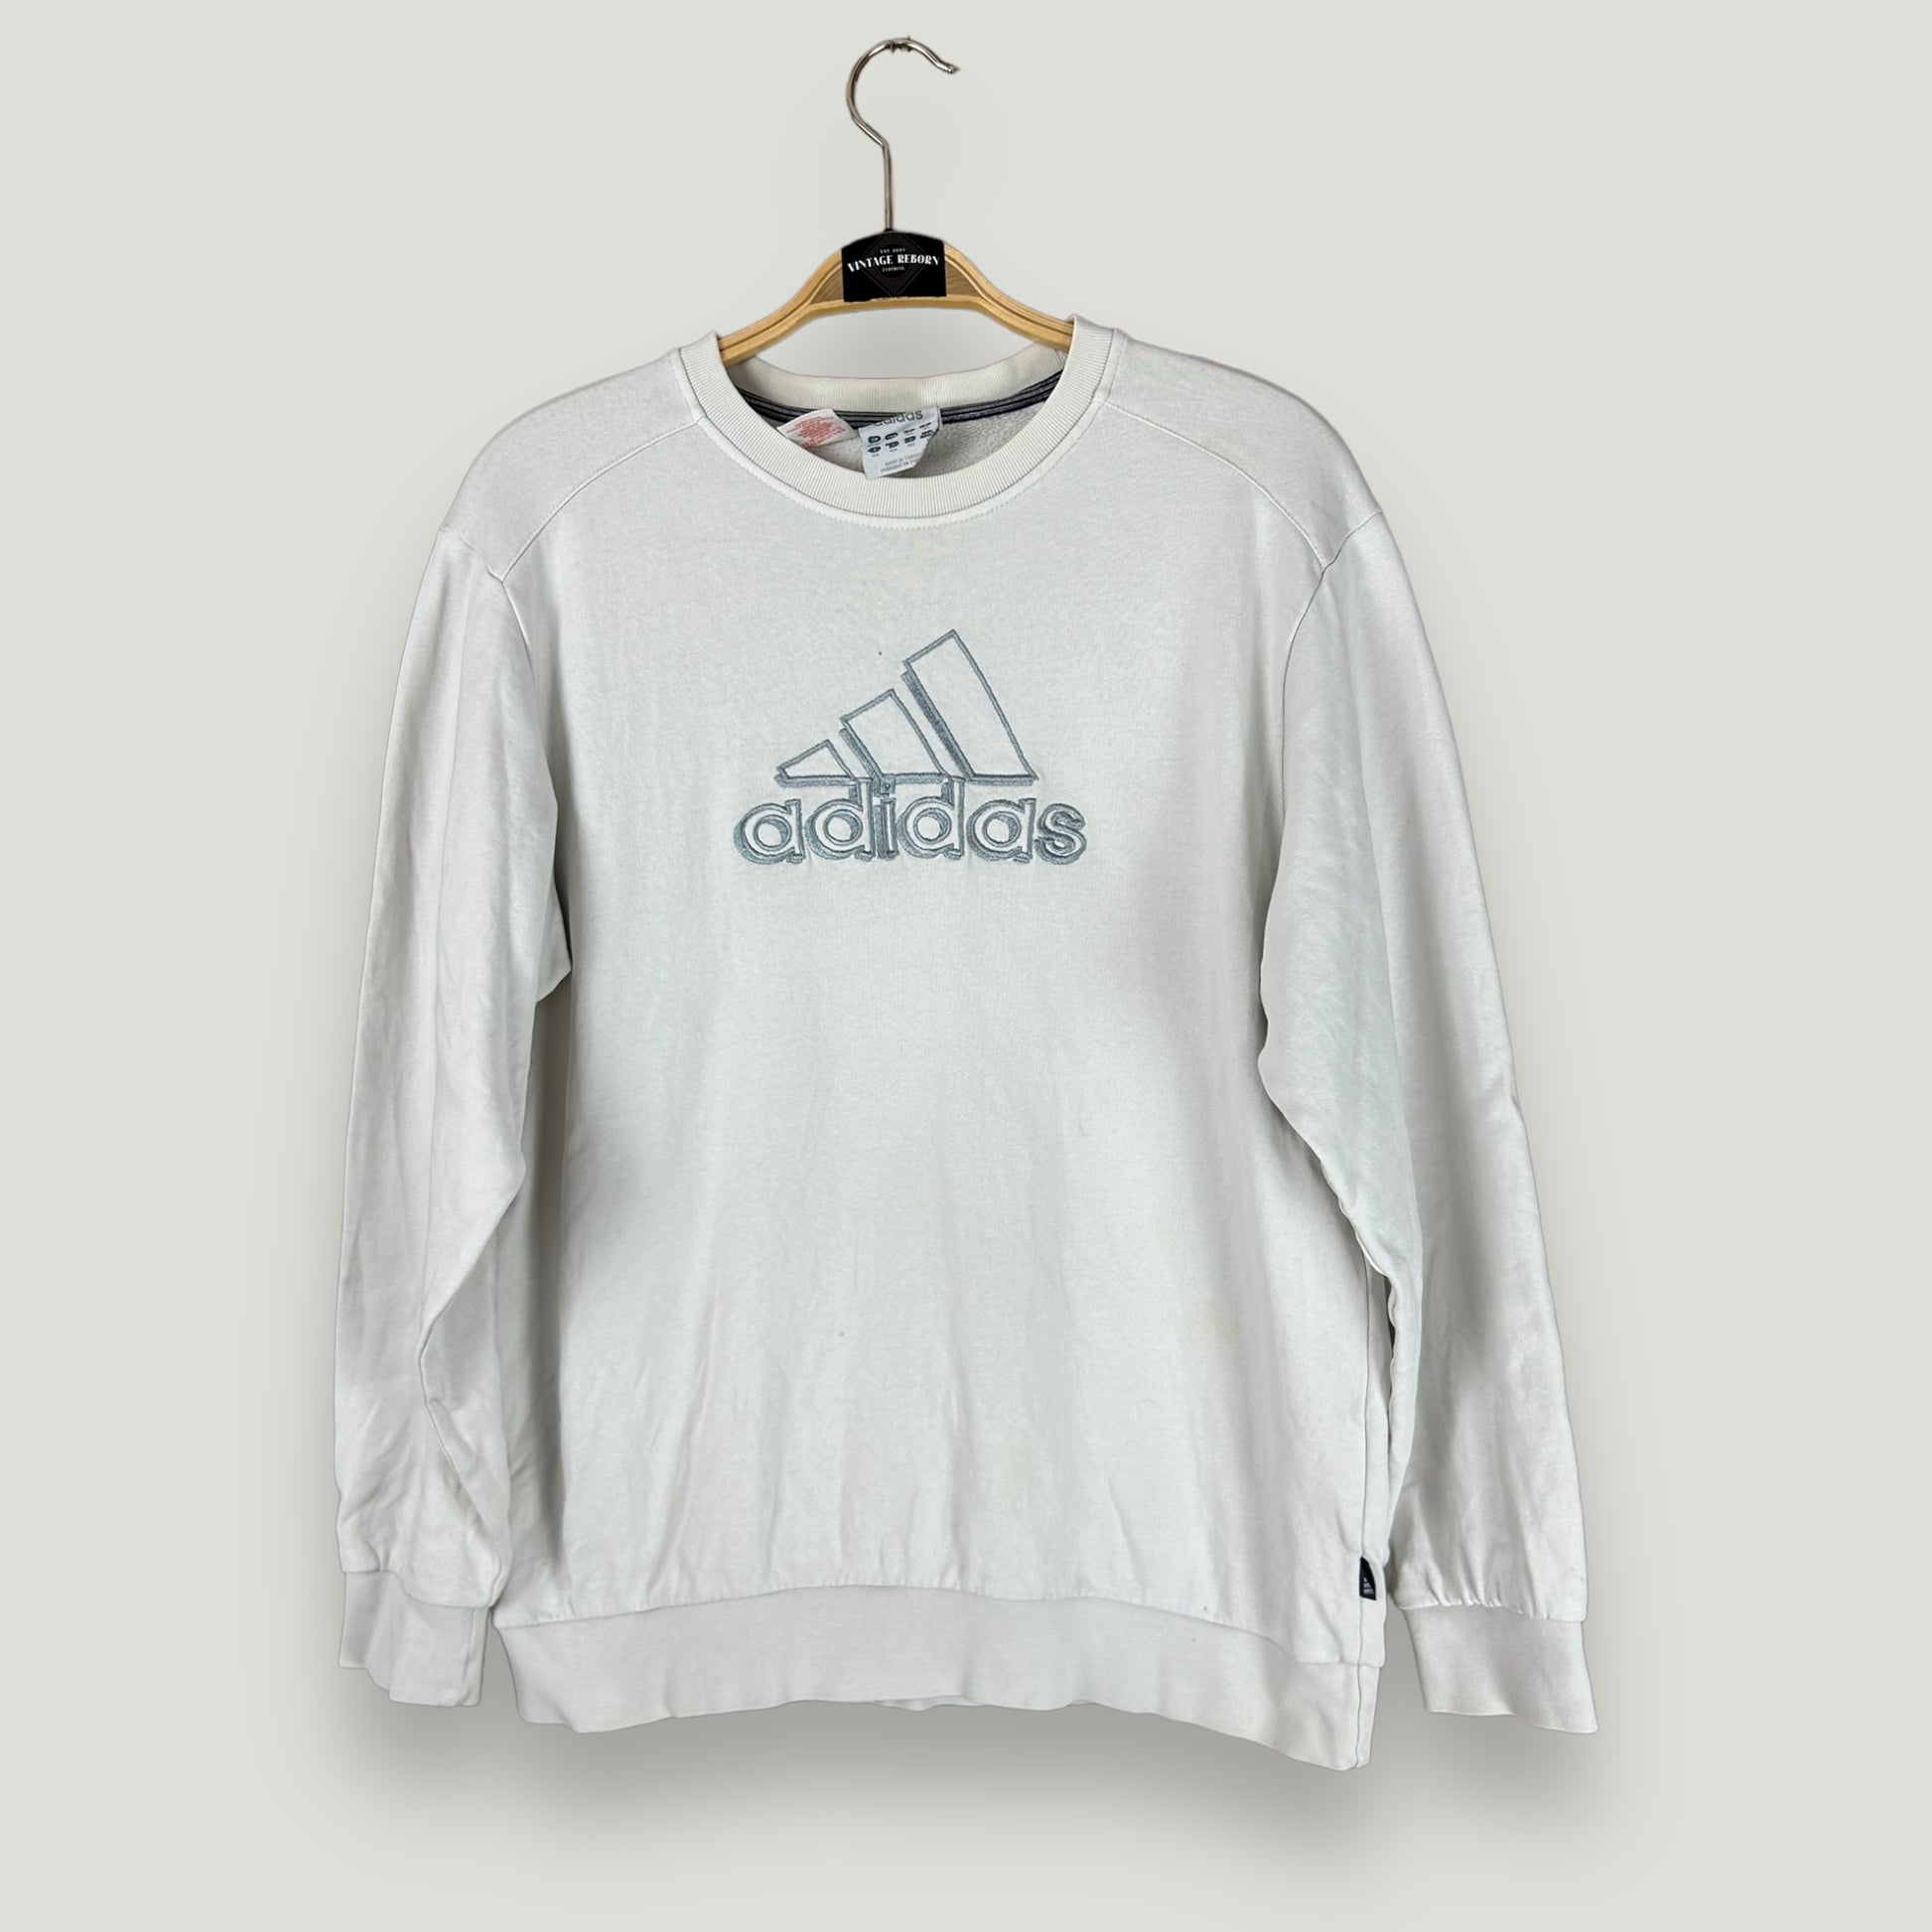 Adidas Sweater - Vintage Reborn